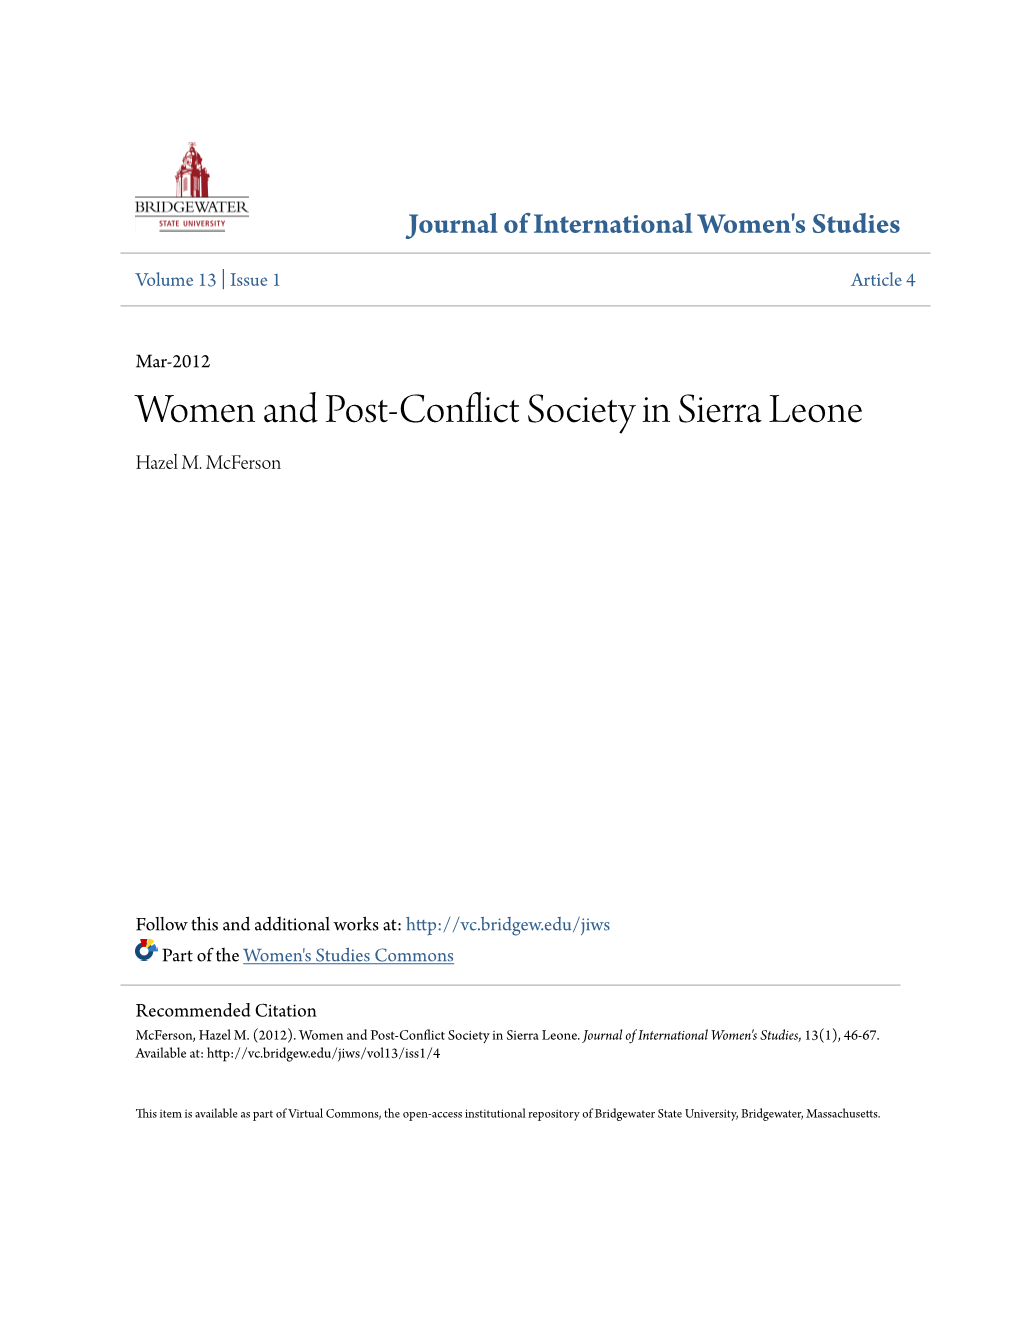 Women and Post-Conflict Society in Sierra Leone Hazel M